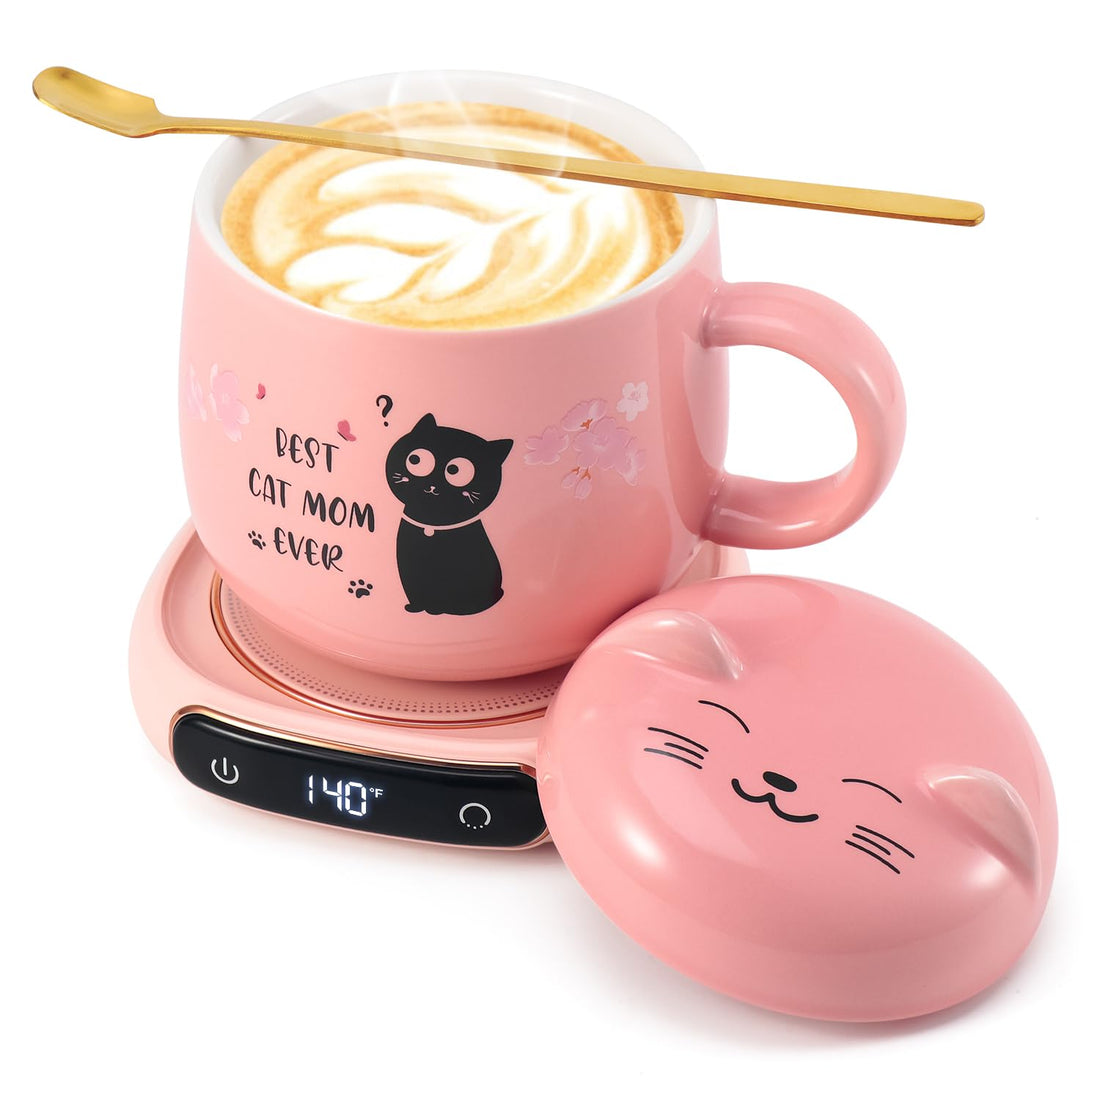 Bsigo Coffee Mug Warmer & Best CAT MOM Ever Mug Set, Electric Candle Mug Warmer 8H Auto Shut Off, Home & Office Beverage Cup Coffee Warmer for Desk, Cat Lover Mom Gift Birthday Women